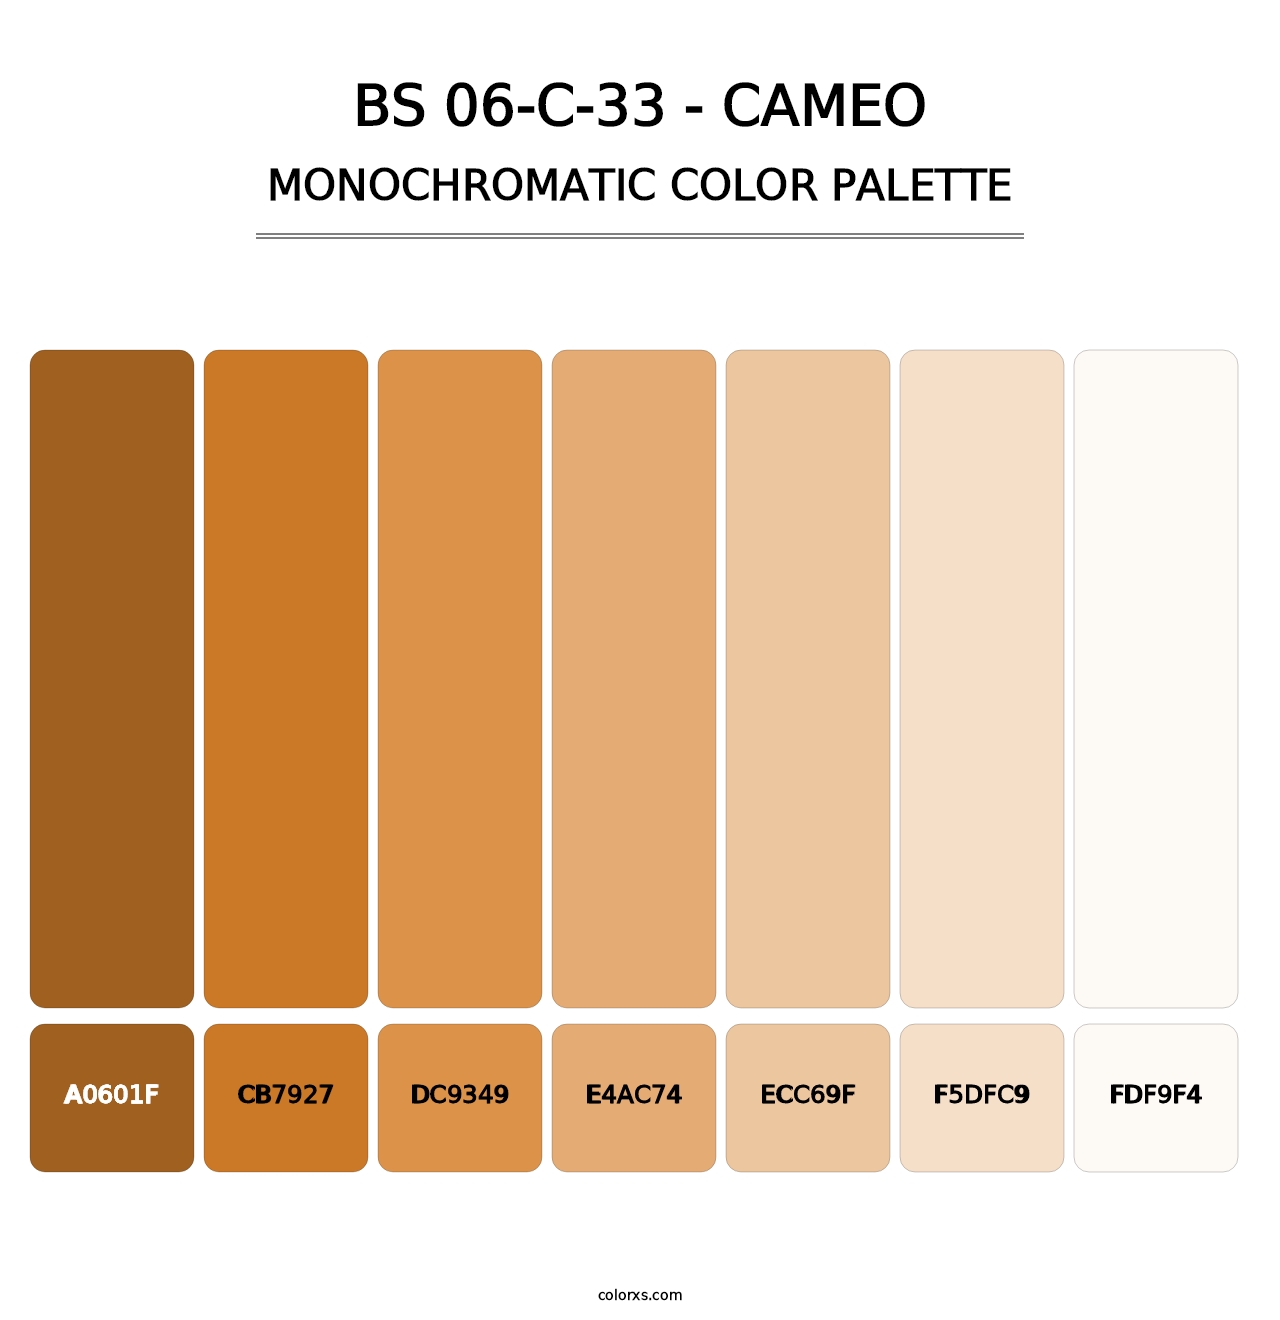 BS 06-C-33 - Cameo - Monochromatic Color Palette